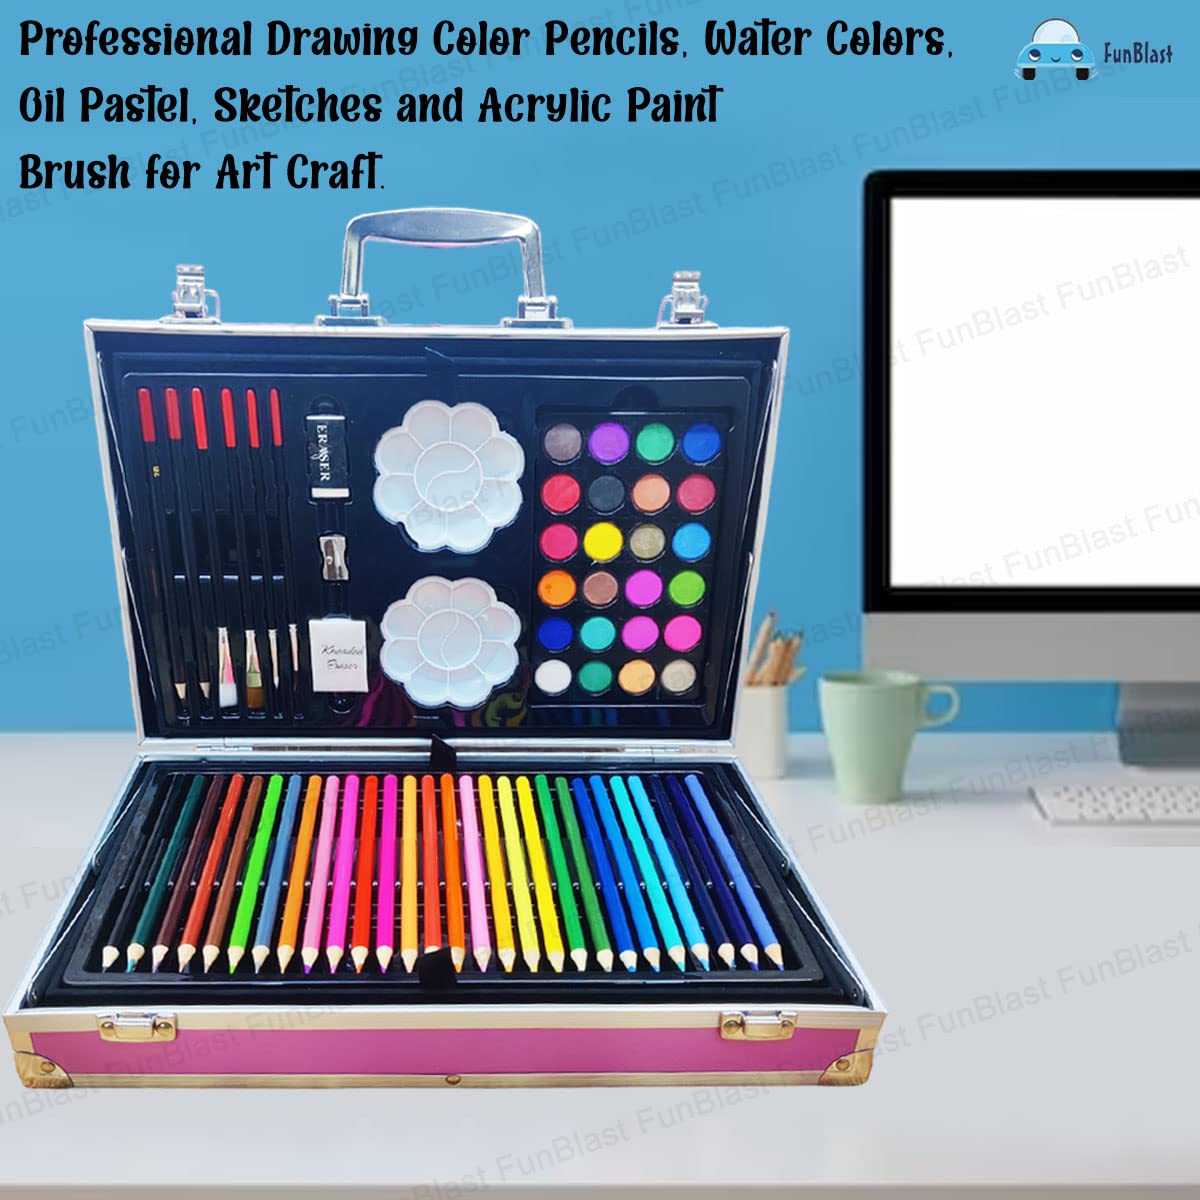 Flipkart.com | BundelkhandSports 1 Colors Box - Color Pencils + Water Colors  + Crayons + Sketch Pens Best Birthday Gift for Kids - Art set